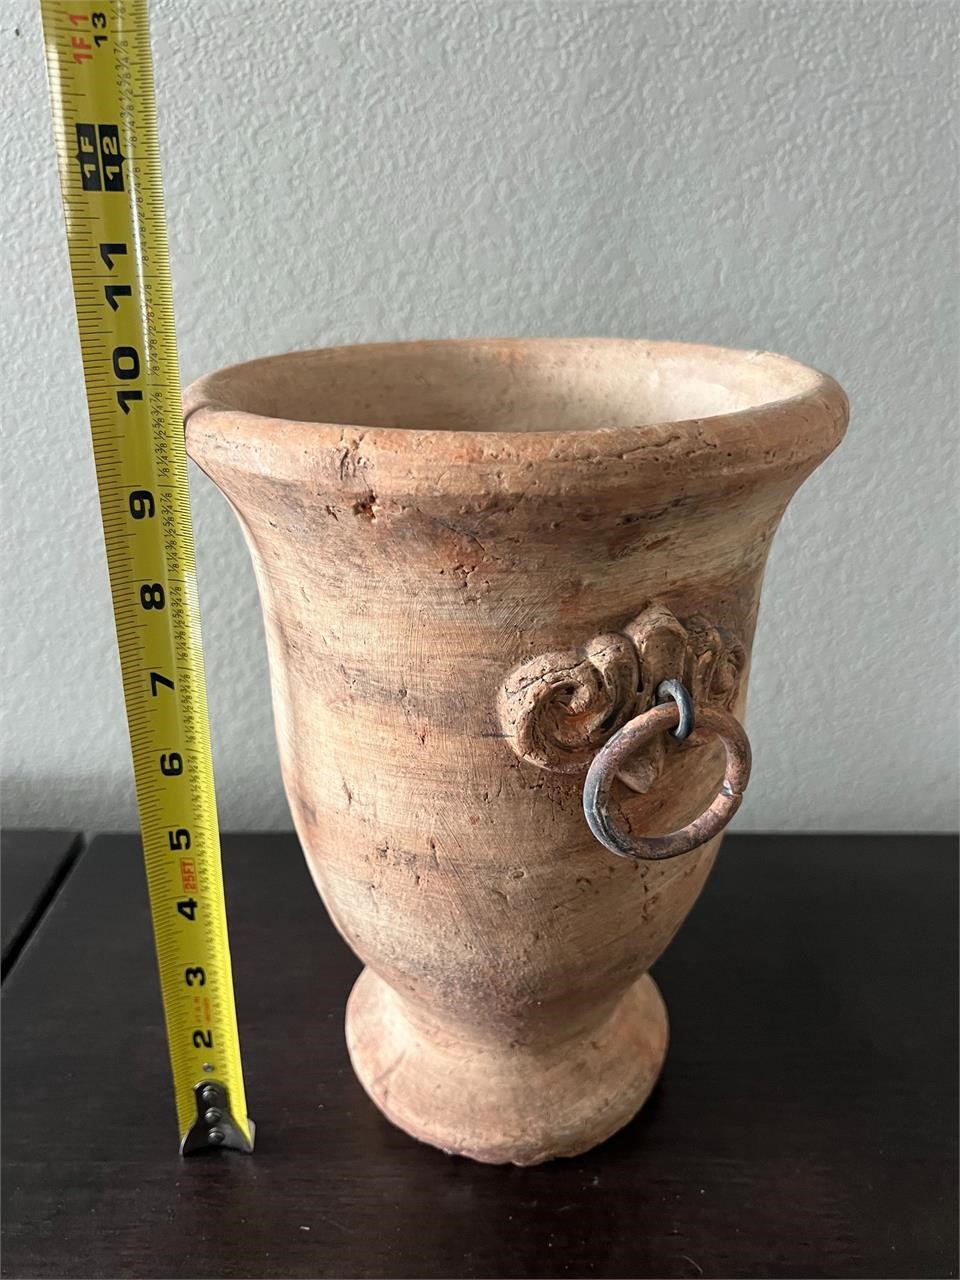 Small Pottery